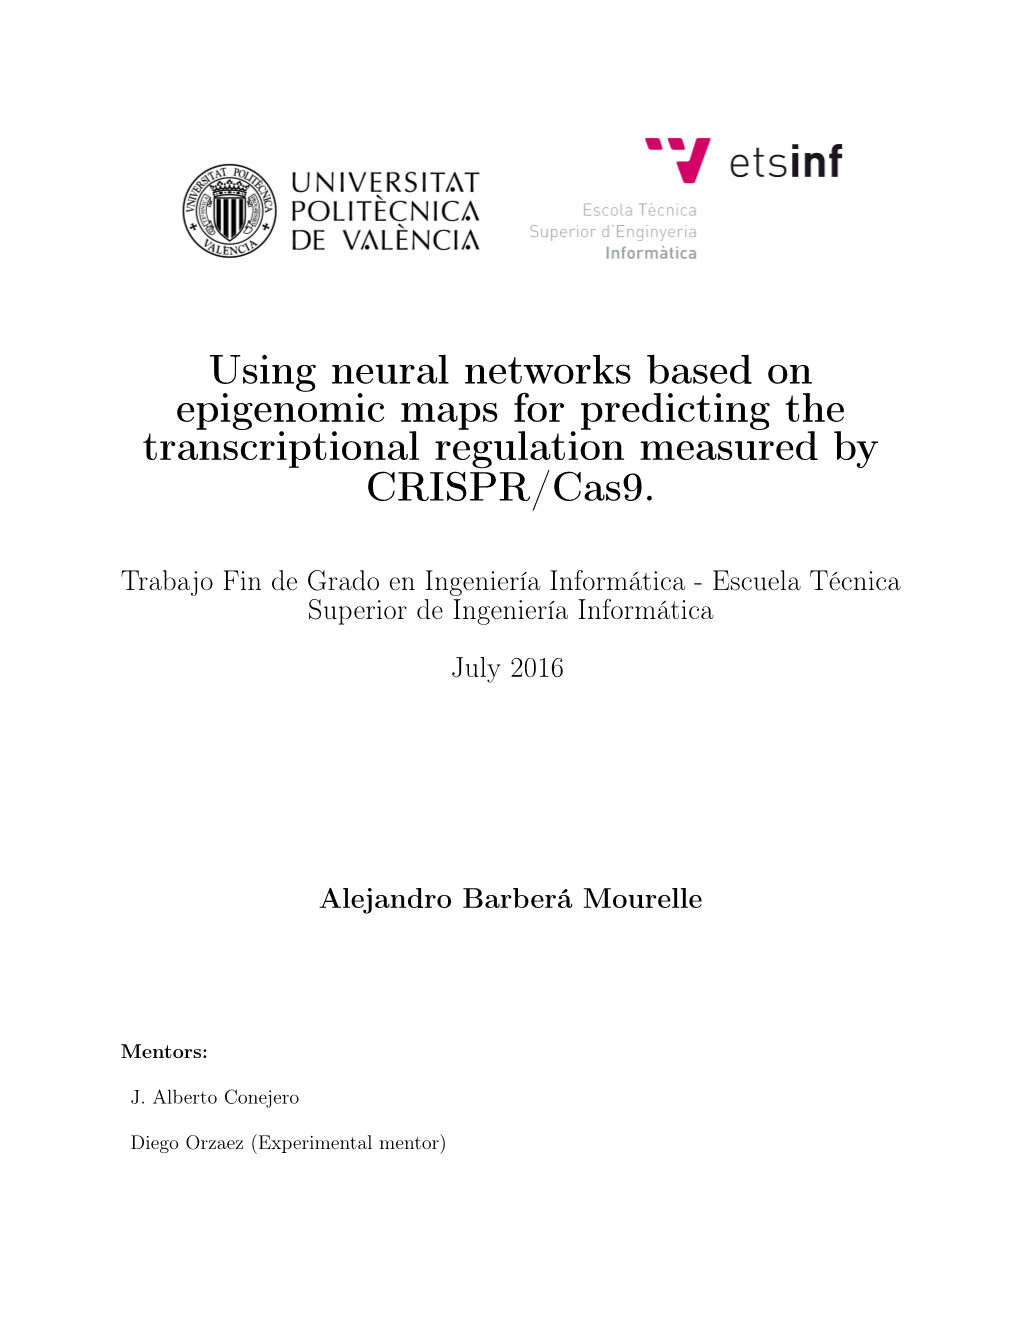 Using Neural Networks Based on Epigenomic Maps for Predicting the Transcriptional Regulation Measured by CRISPR/Cas9